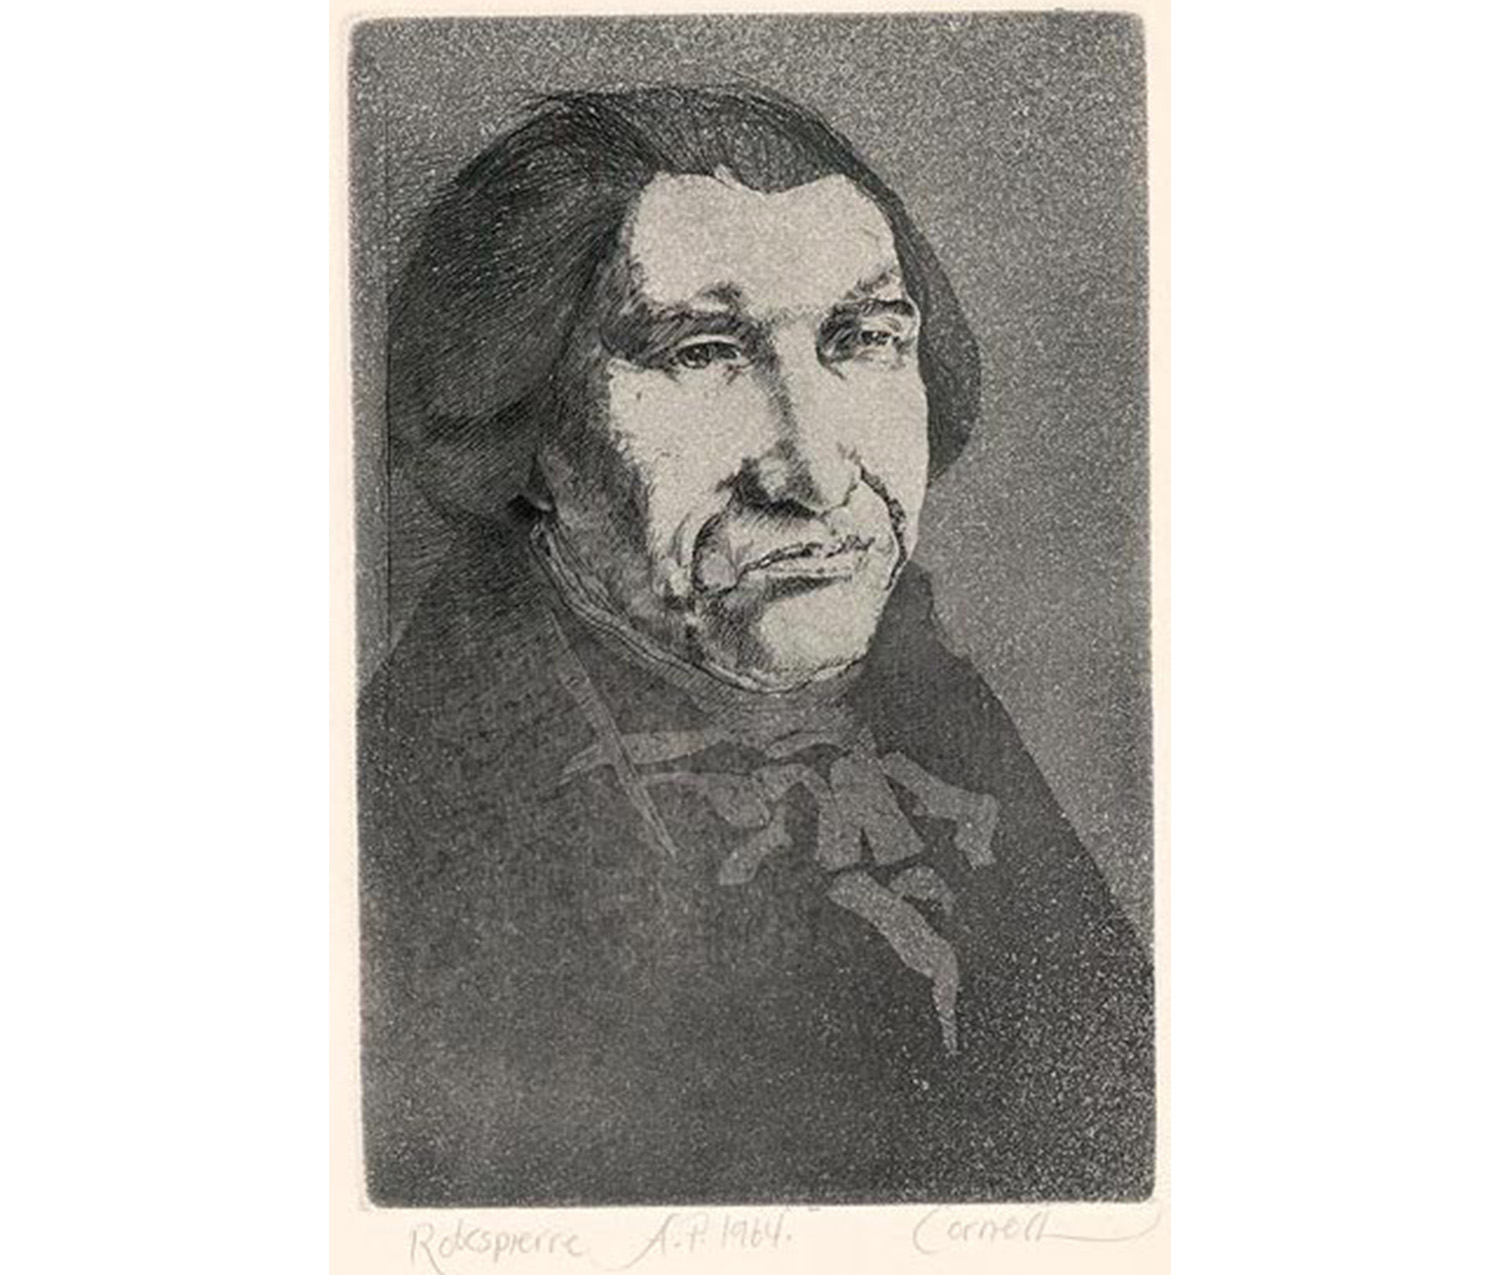 Bust portrait of man with dark hair and dark coat